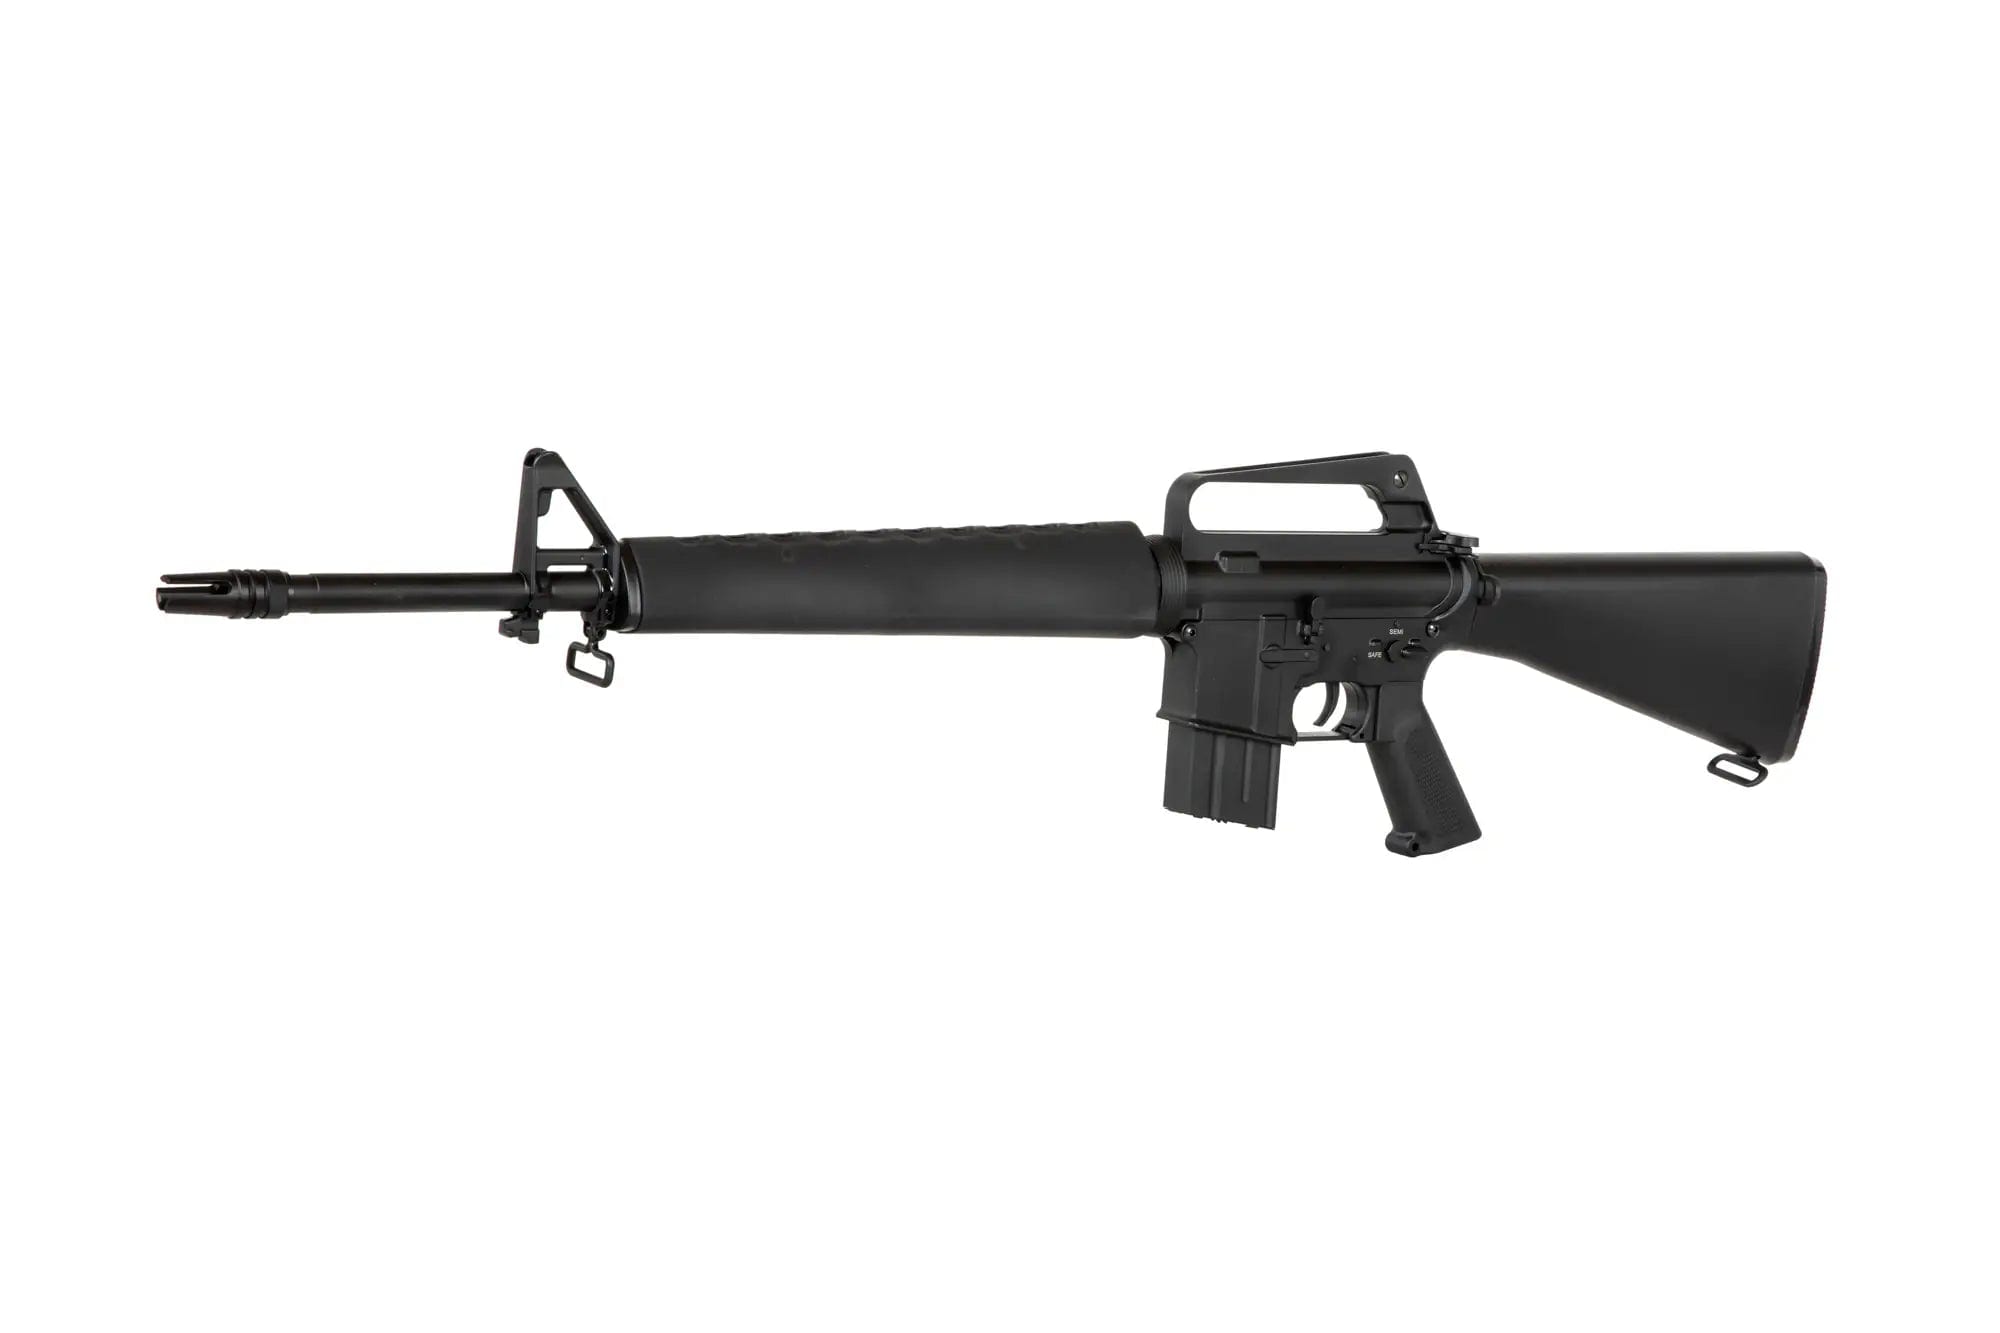 M16 Vietnam replica